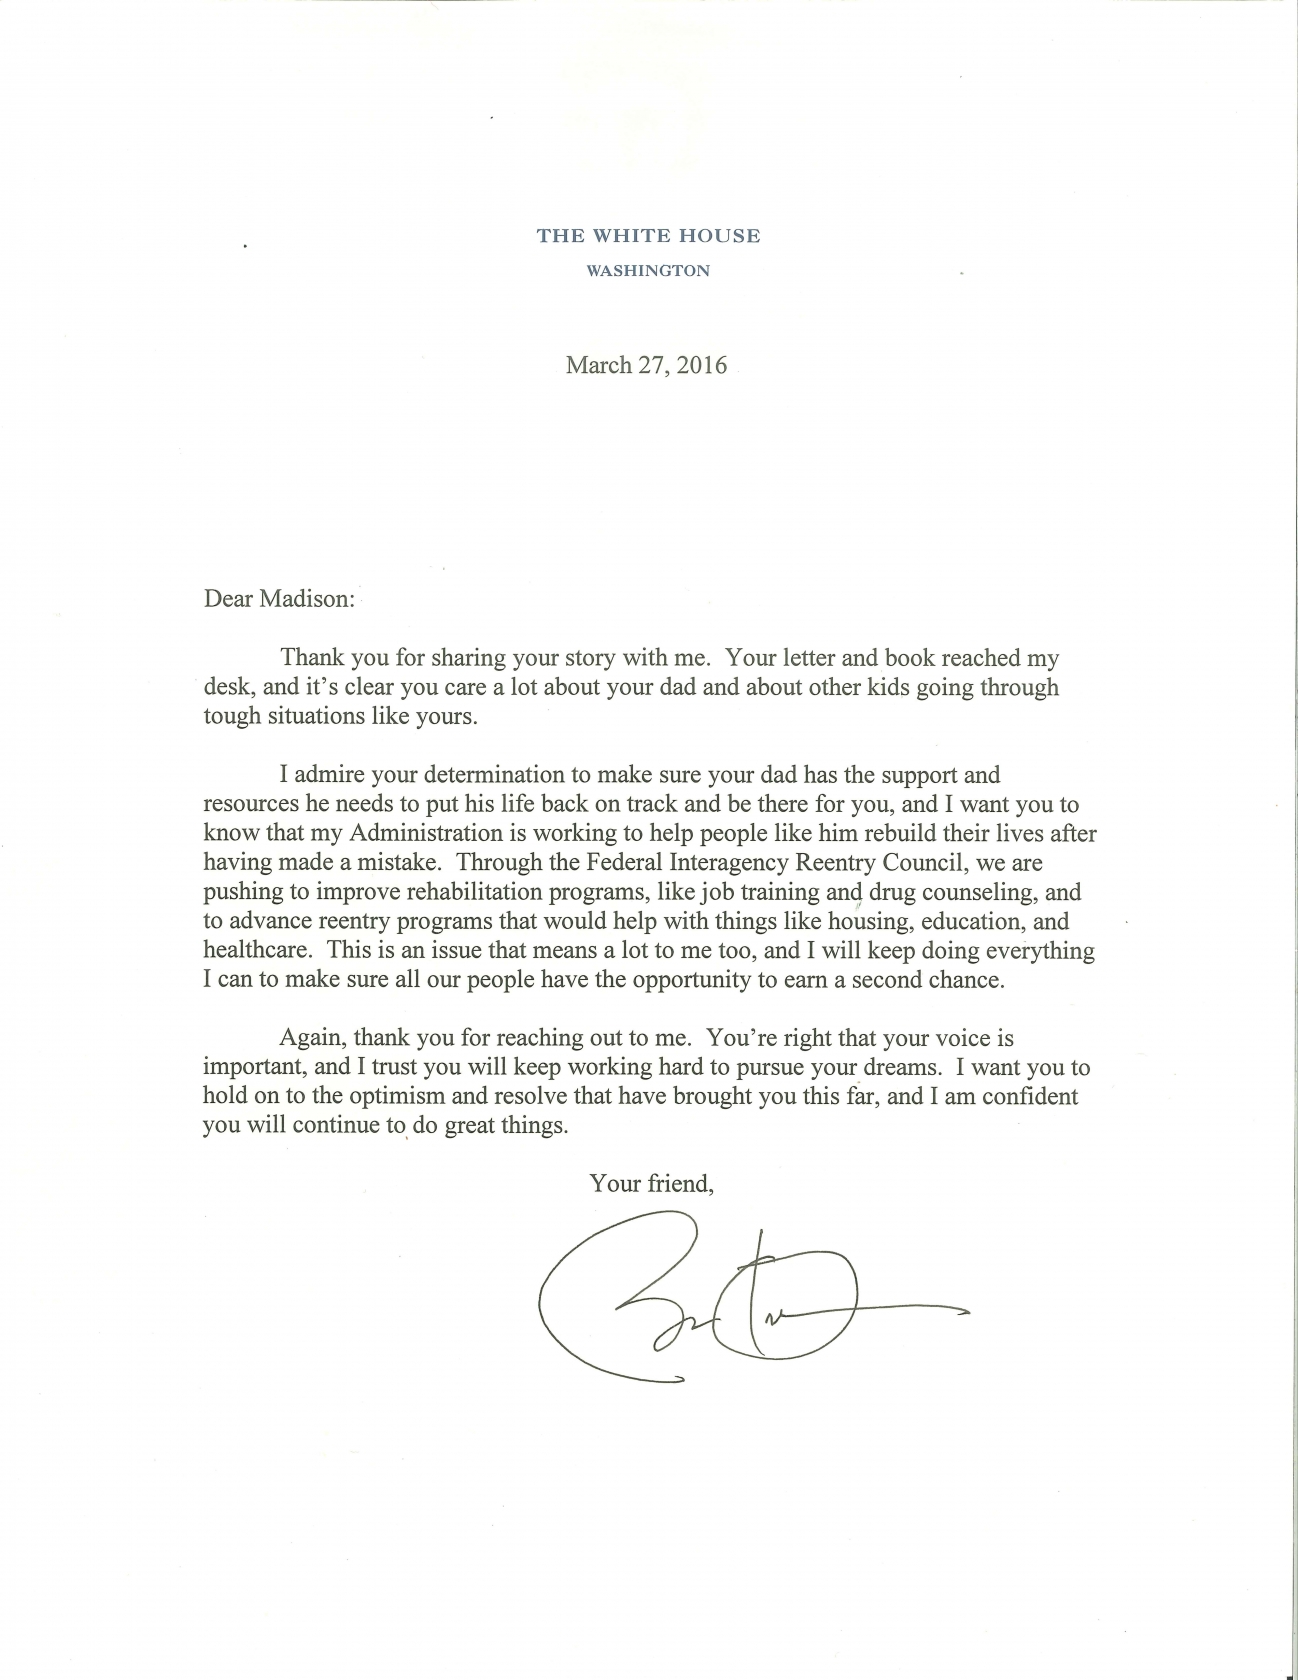 President Obama's Response to Madison